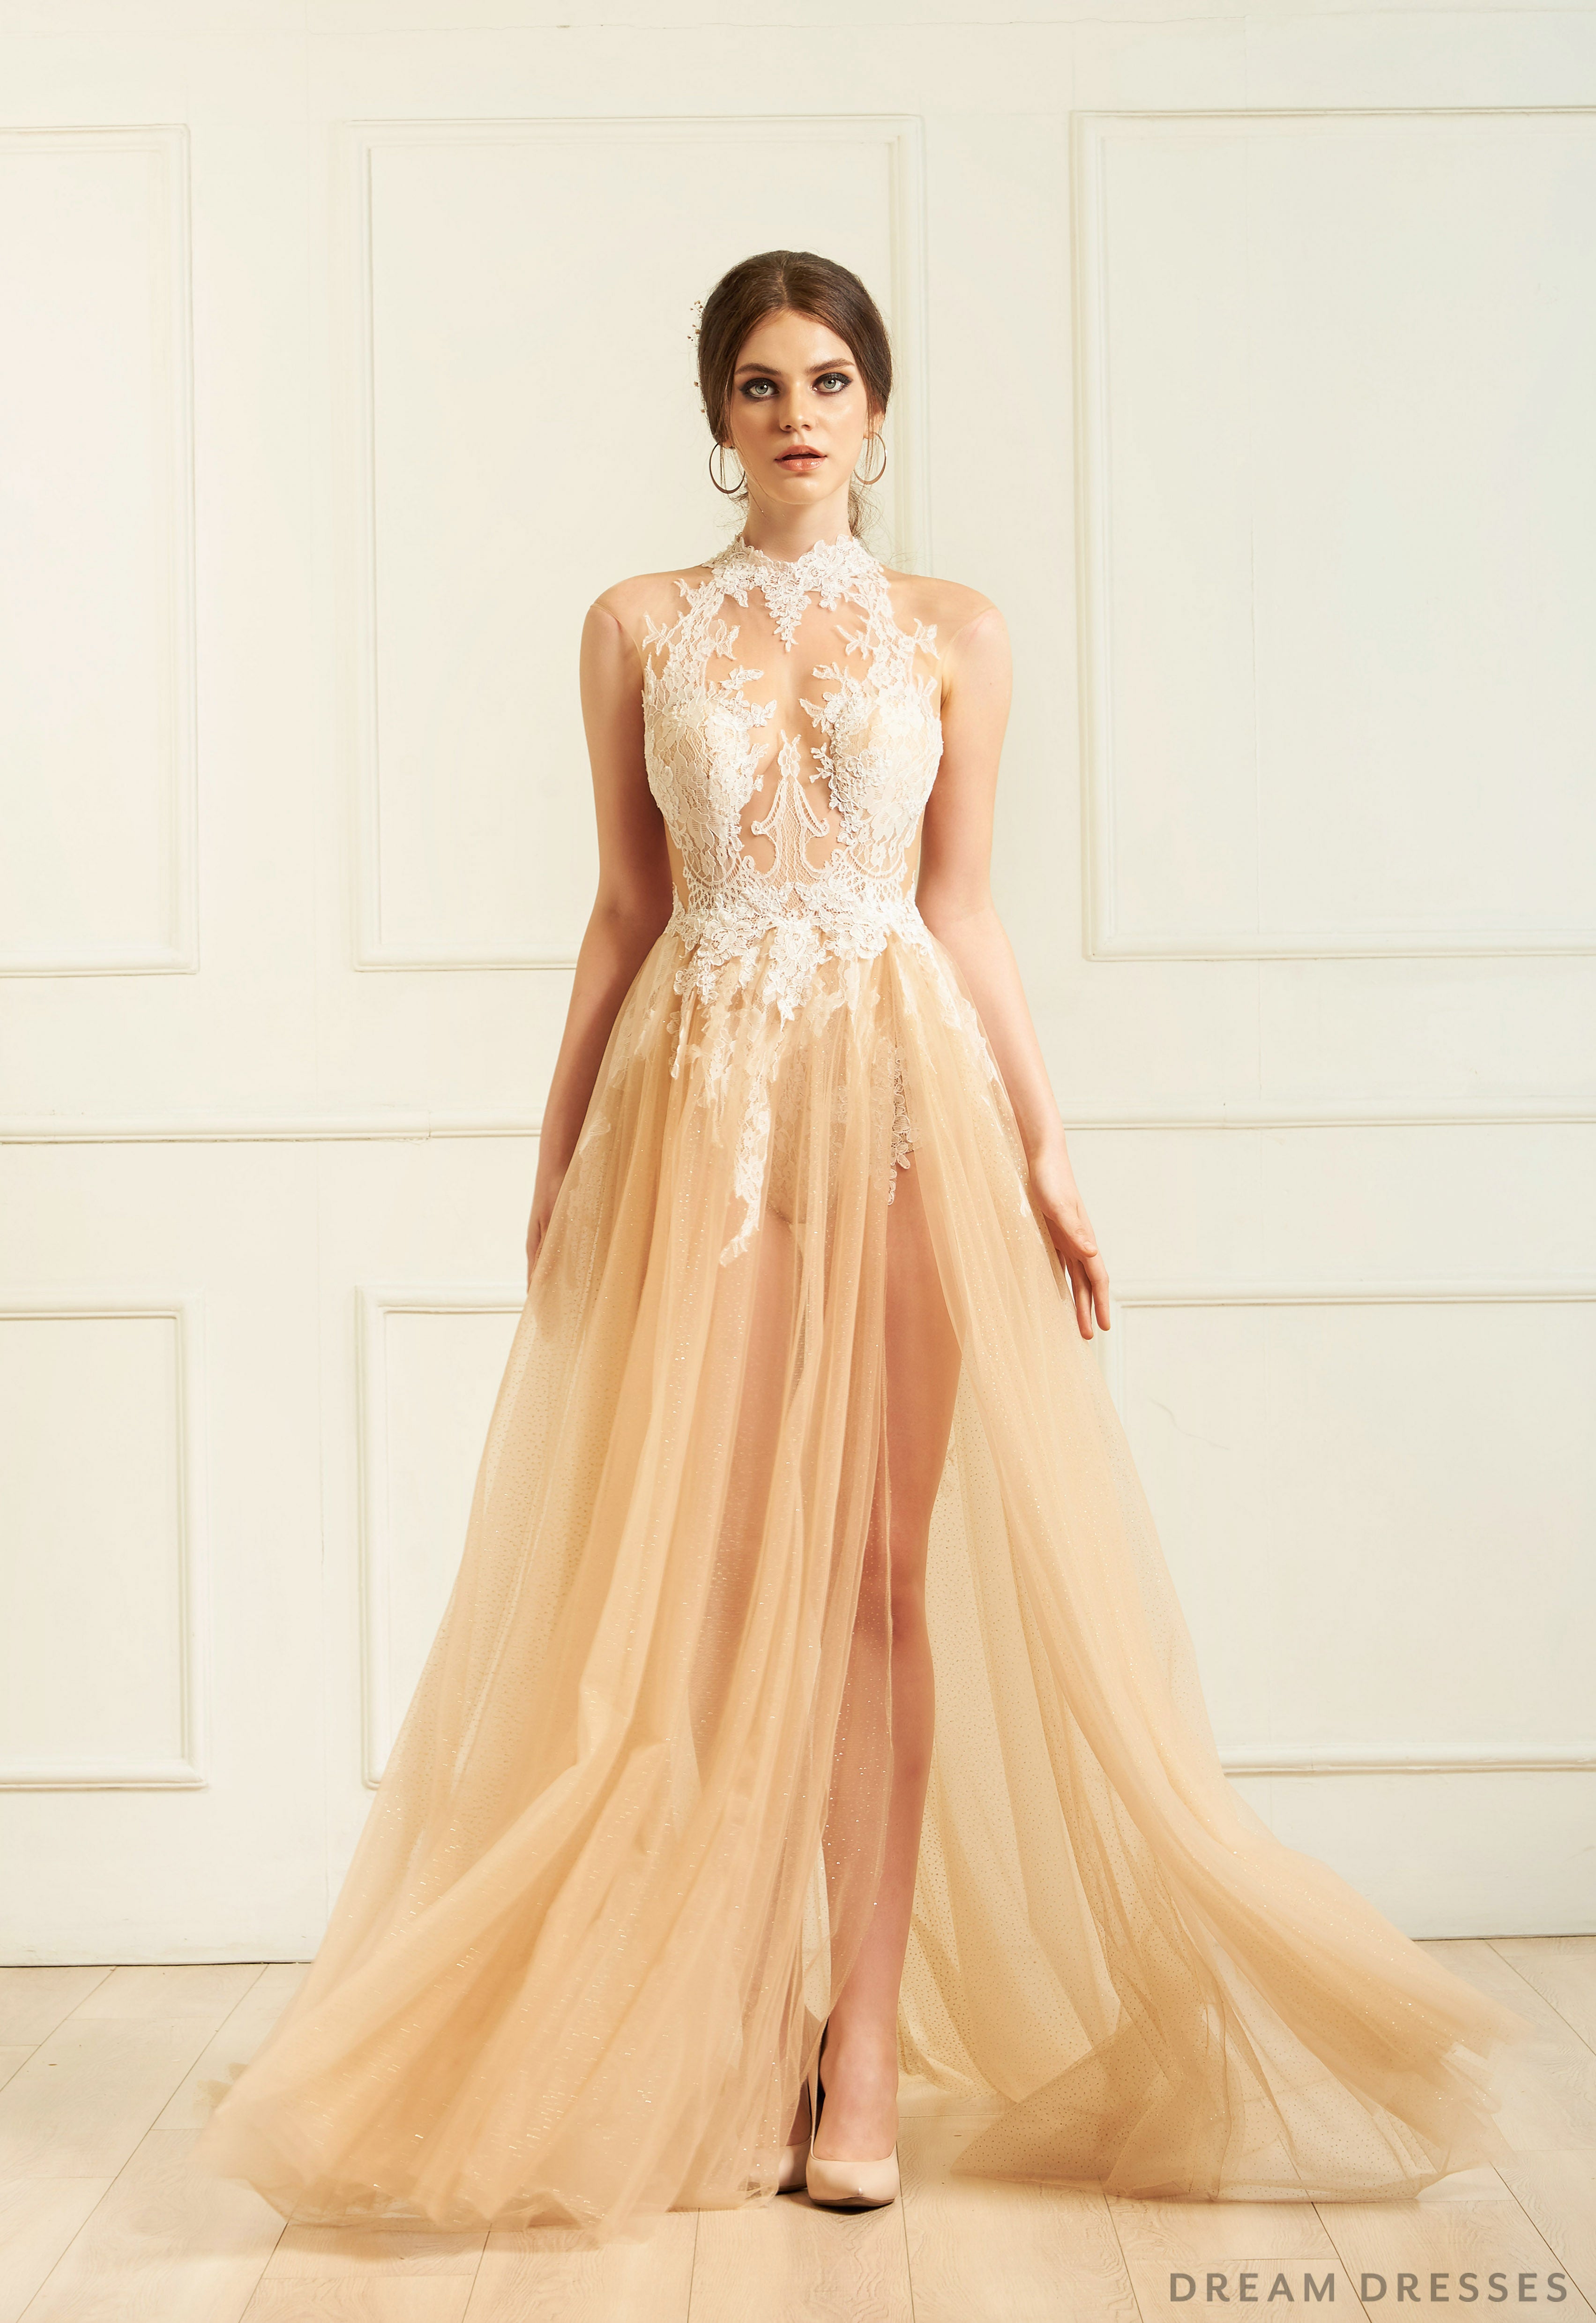 Lace Bridal Bodysuit with Side Slit, Dream Dresses by P.M.N